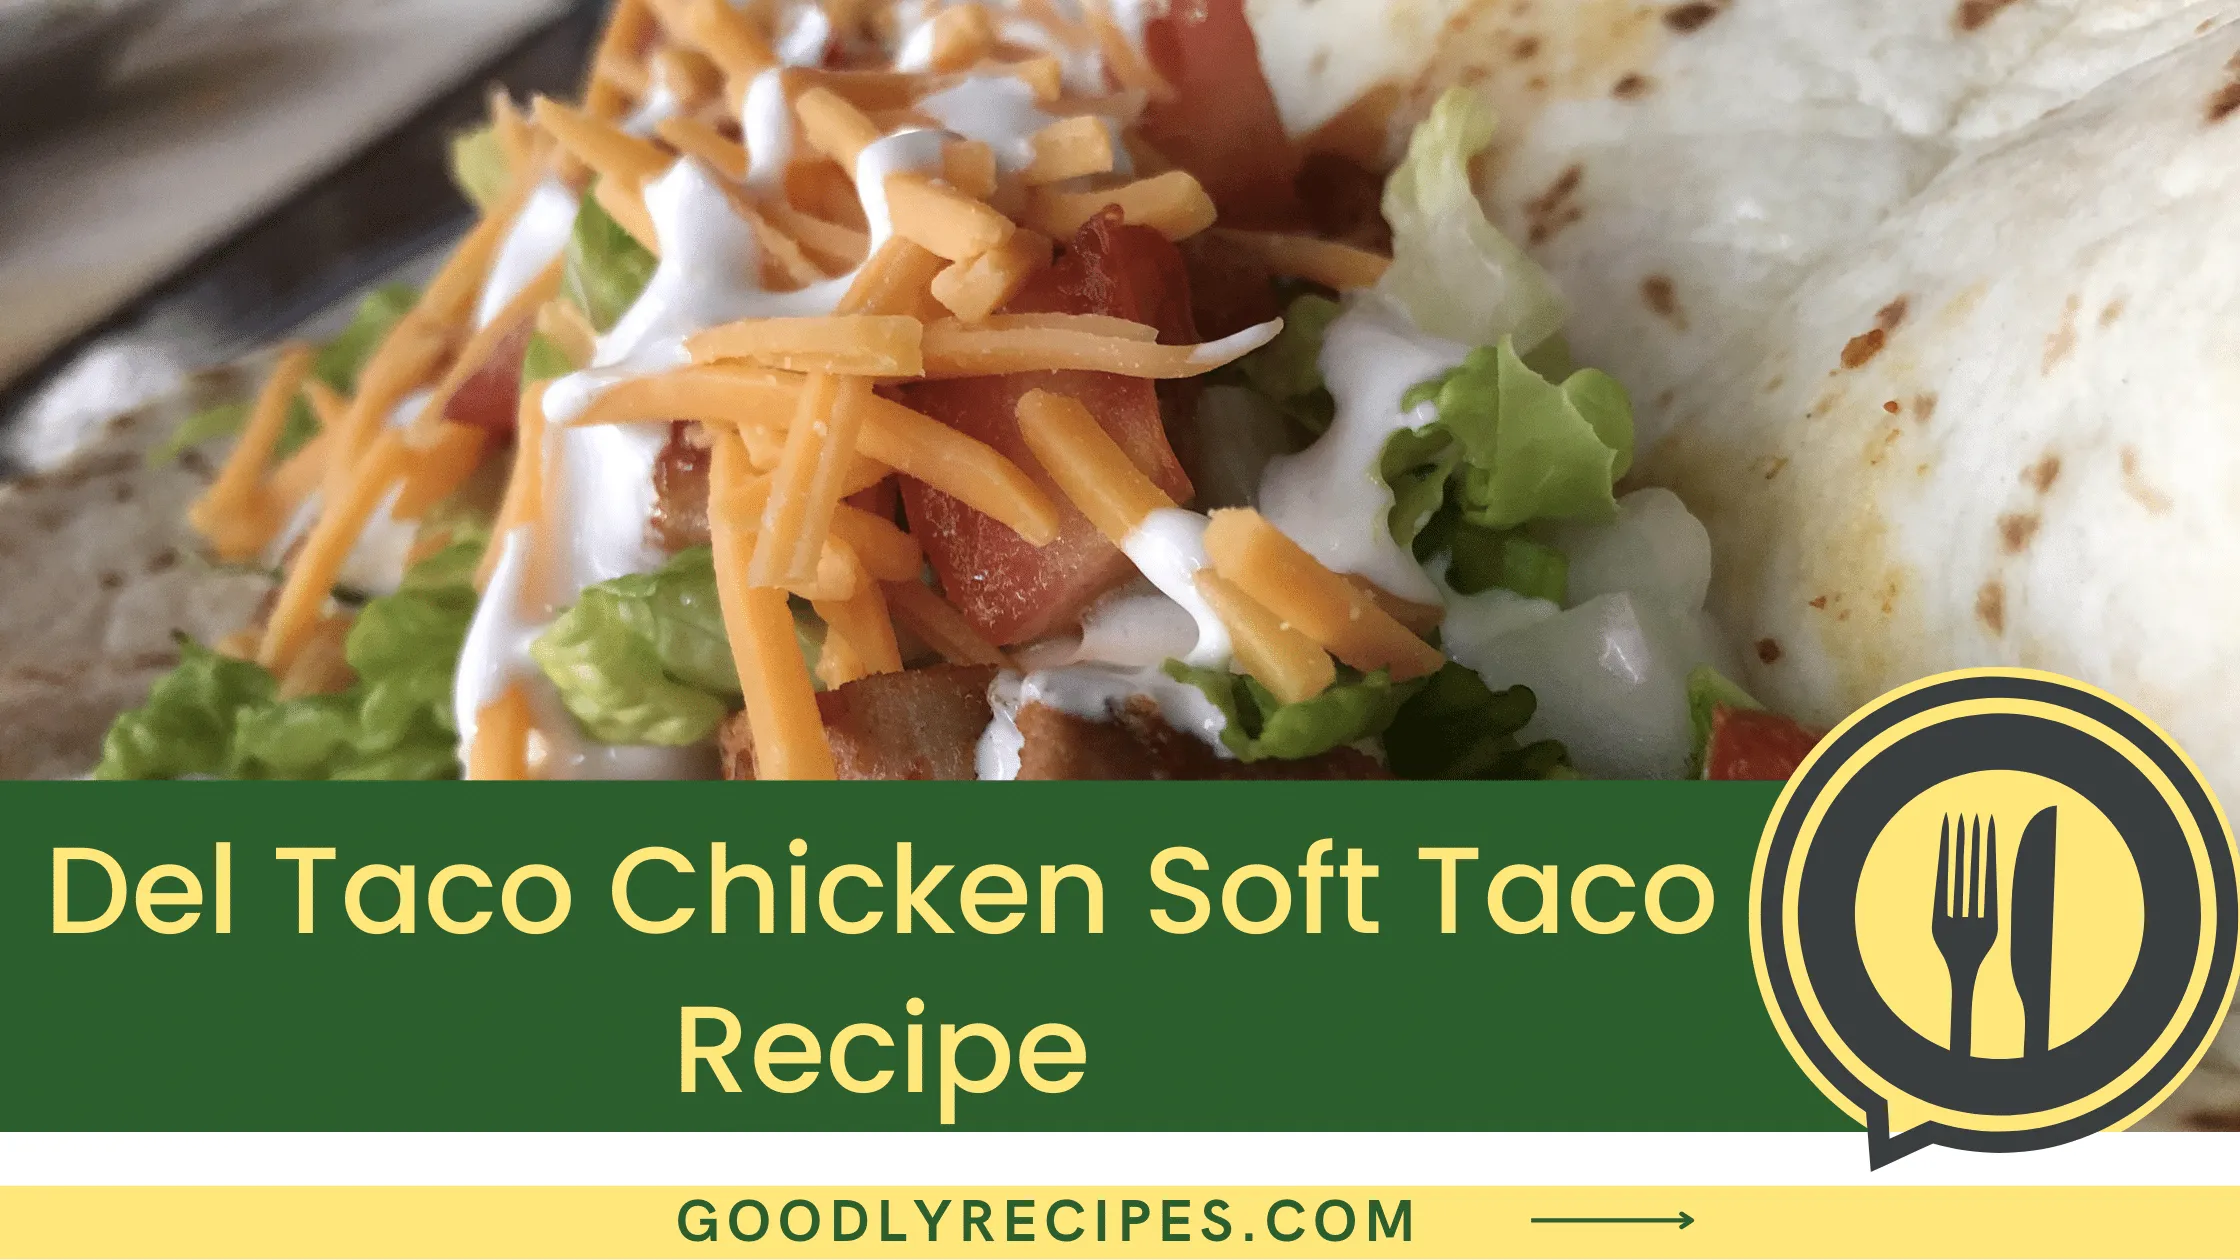 Del Taco Chicken Soft Taco Recipe - For Food Lovers